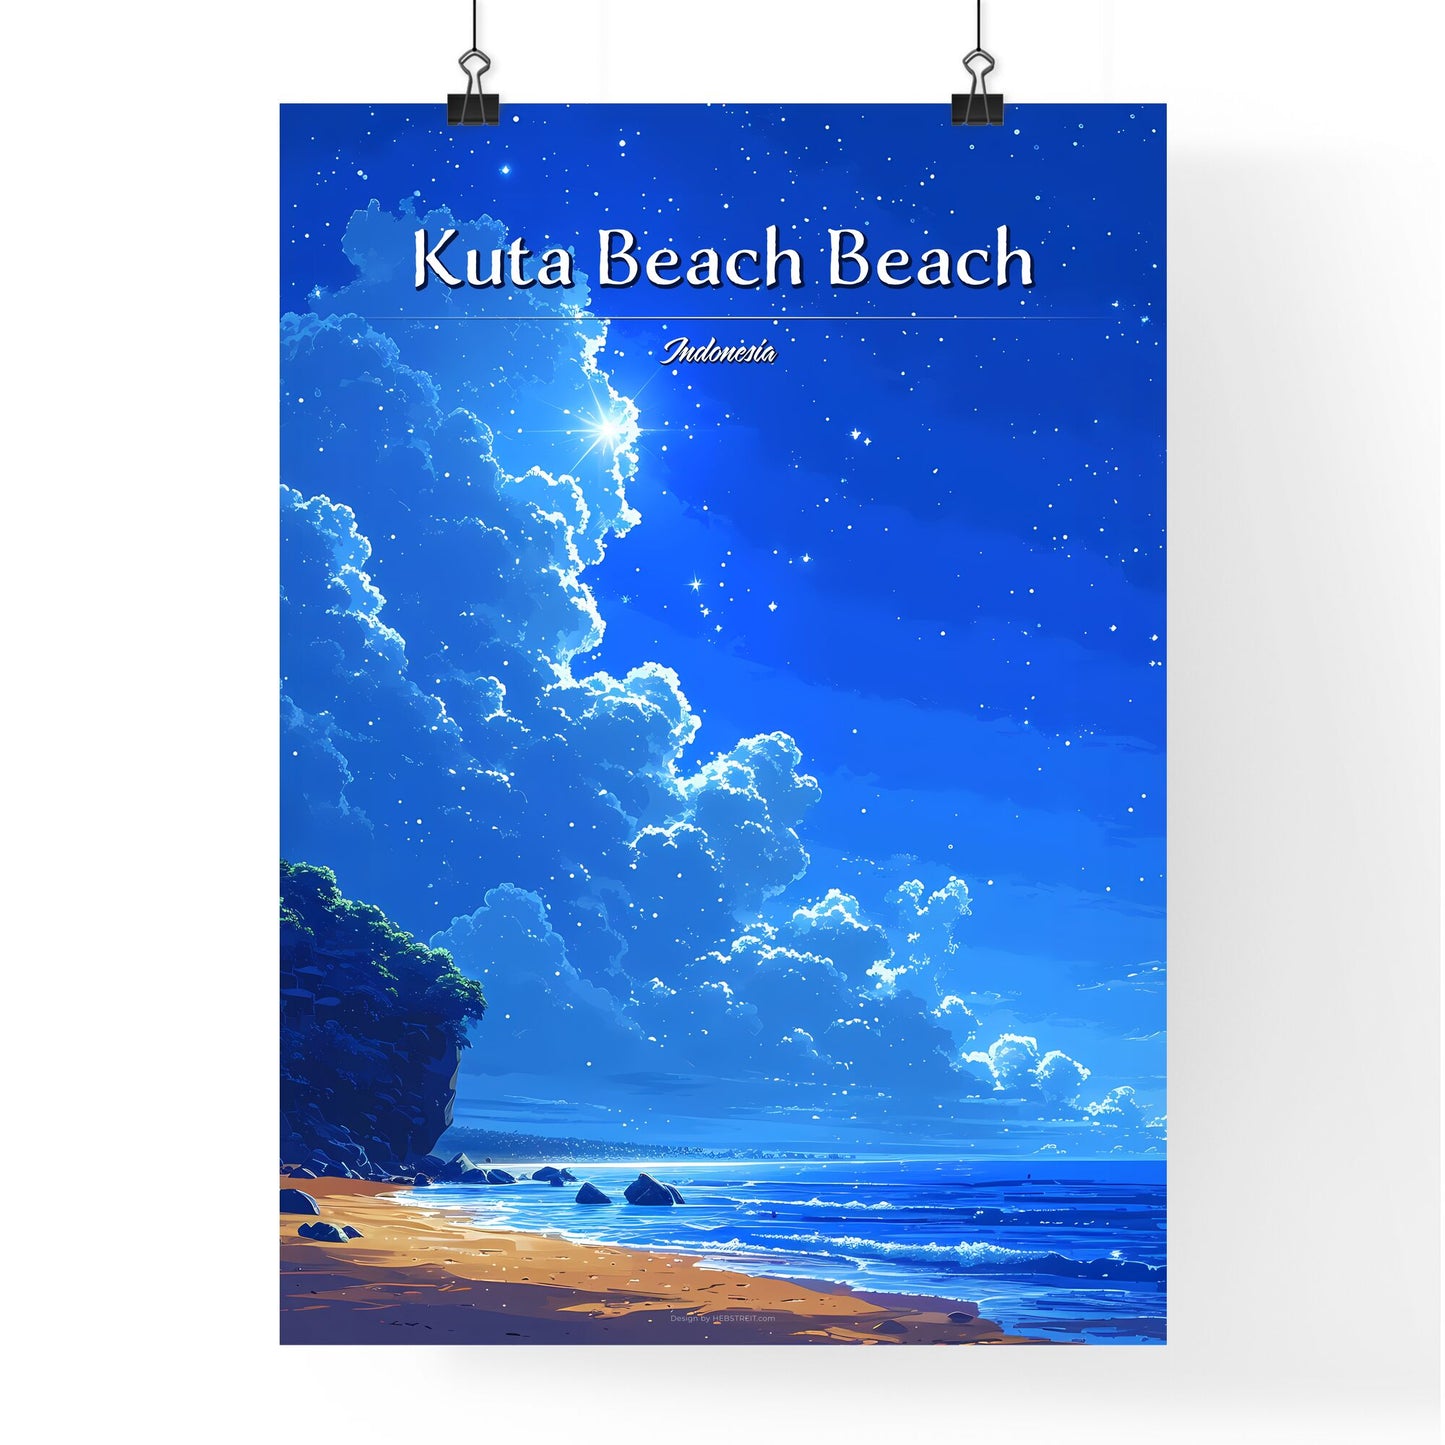 Kuta Beach Beach, Indonesia - Art print of a beach with rocks and clouds Default Title